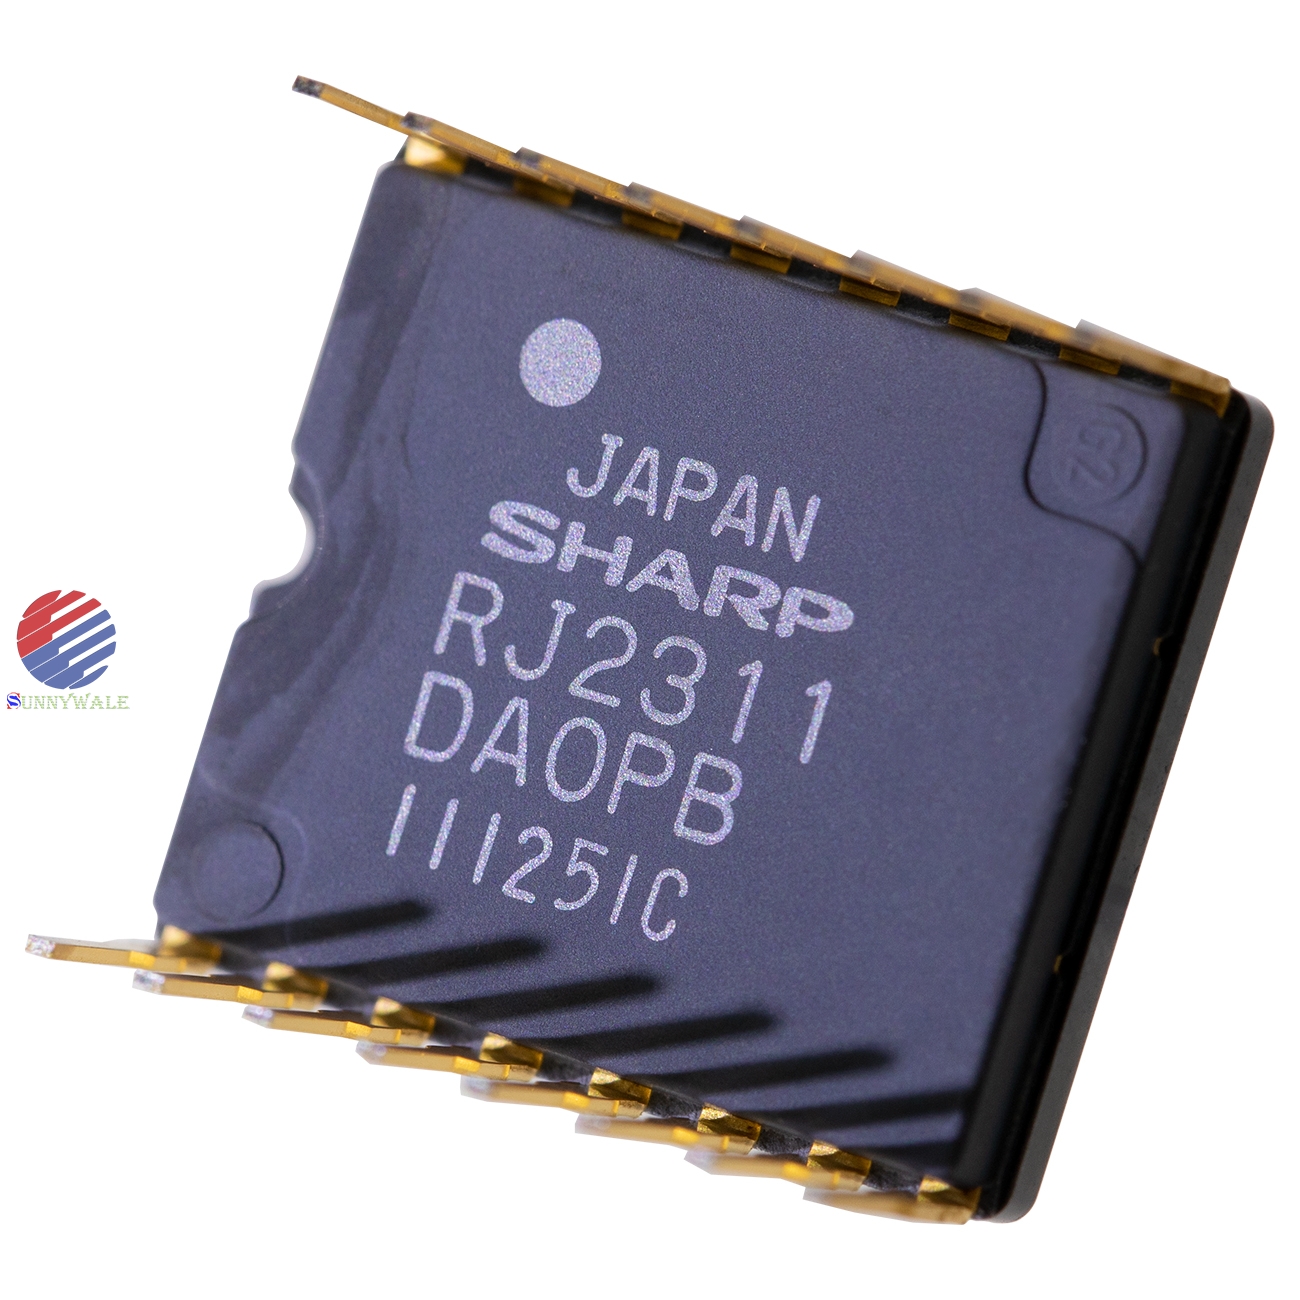 RJ2311DAOPB, RJ2311DA0PB, SHARP 1/3 CCD, image sensor, global  shutter exposure, for color security analog cameras